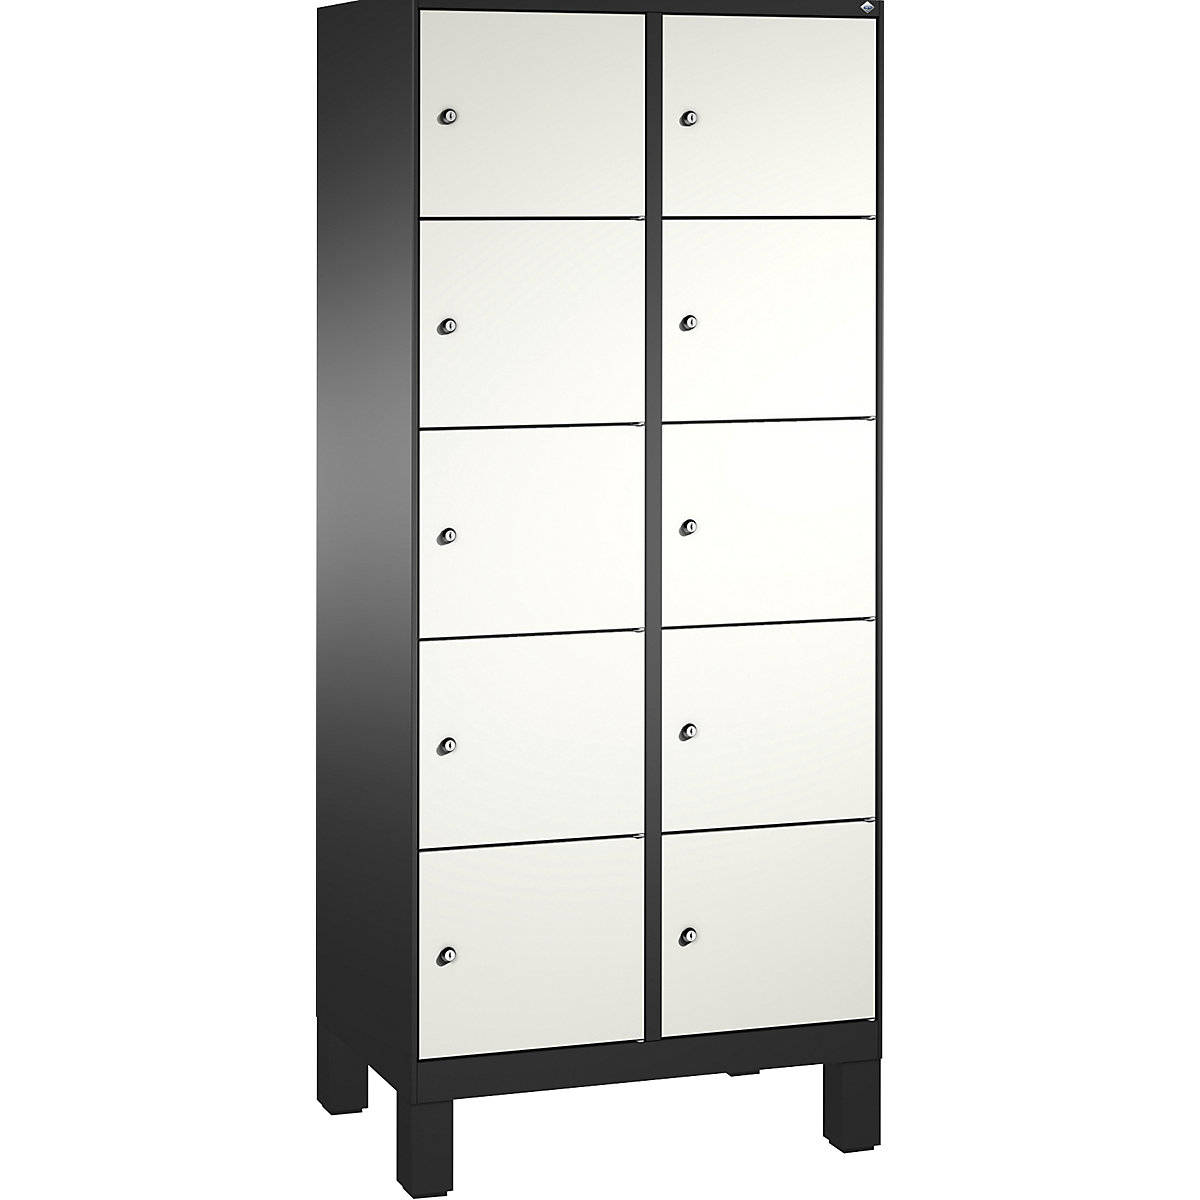 EVOLO locker unit, with feet – C+P, 2 compartments, 5 shelf compartments each, compartment width 400 mm, black grey / traffic white-6